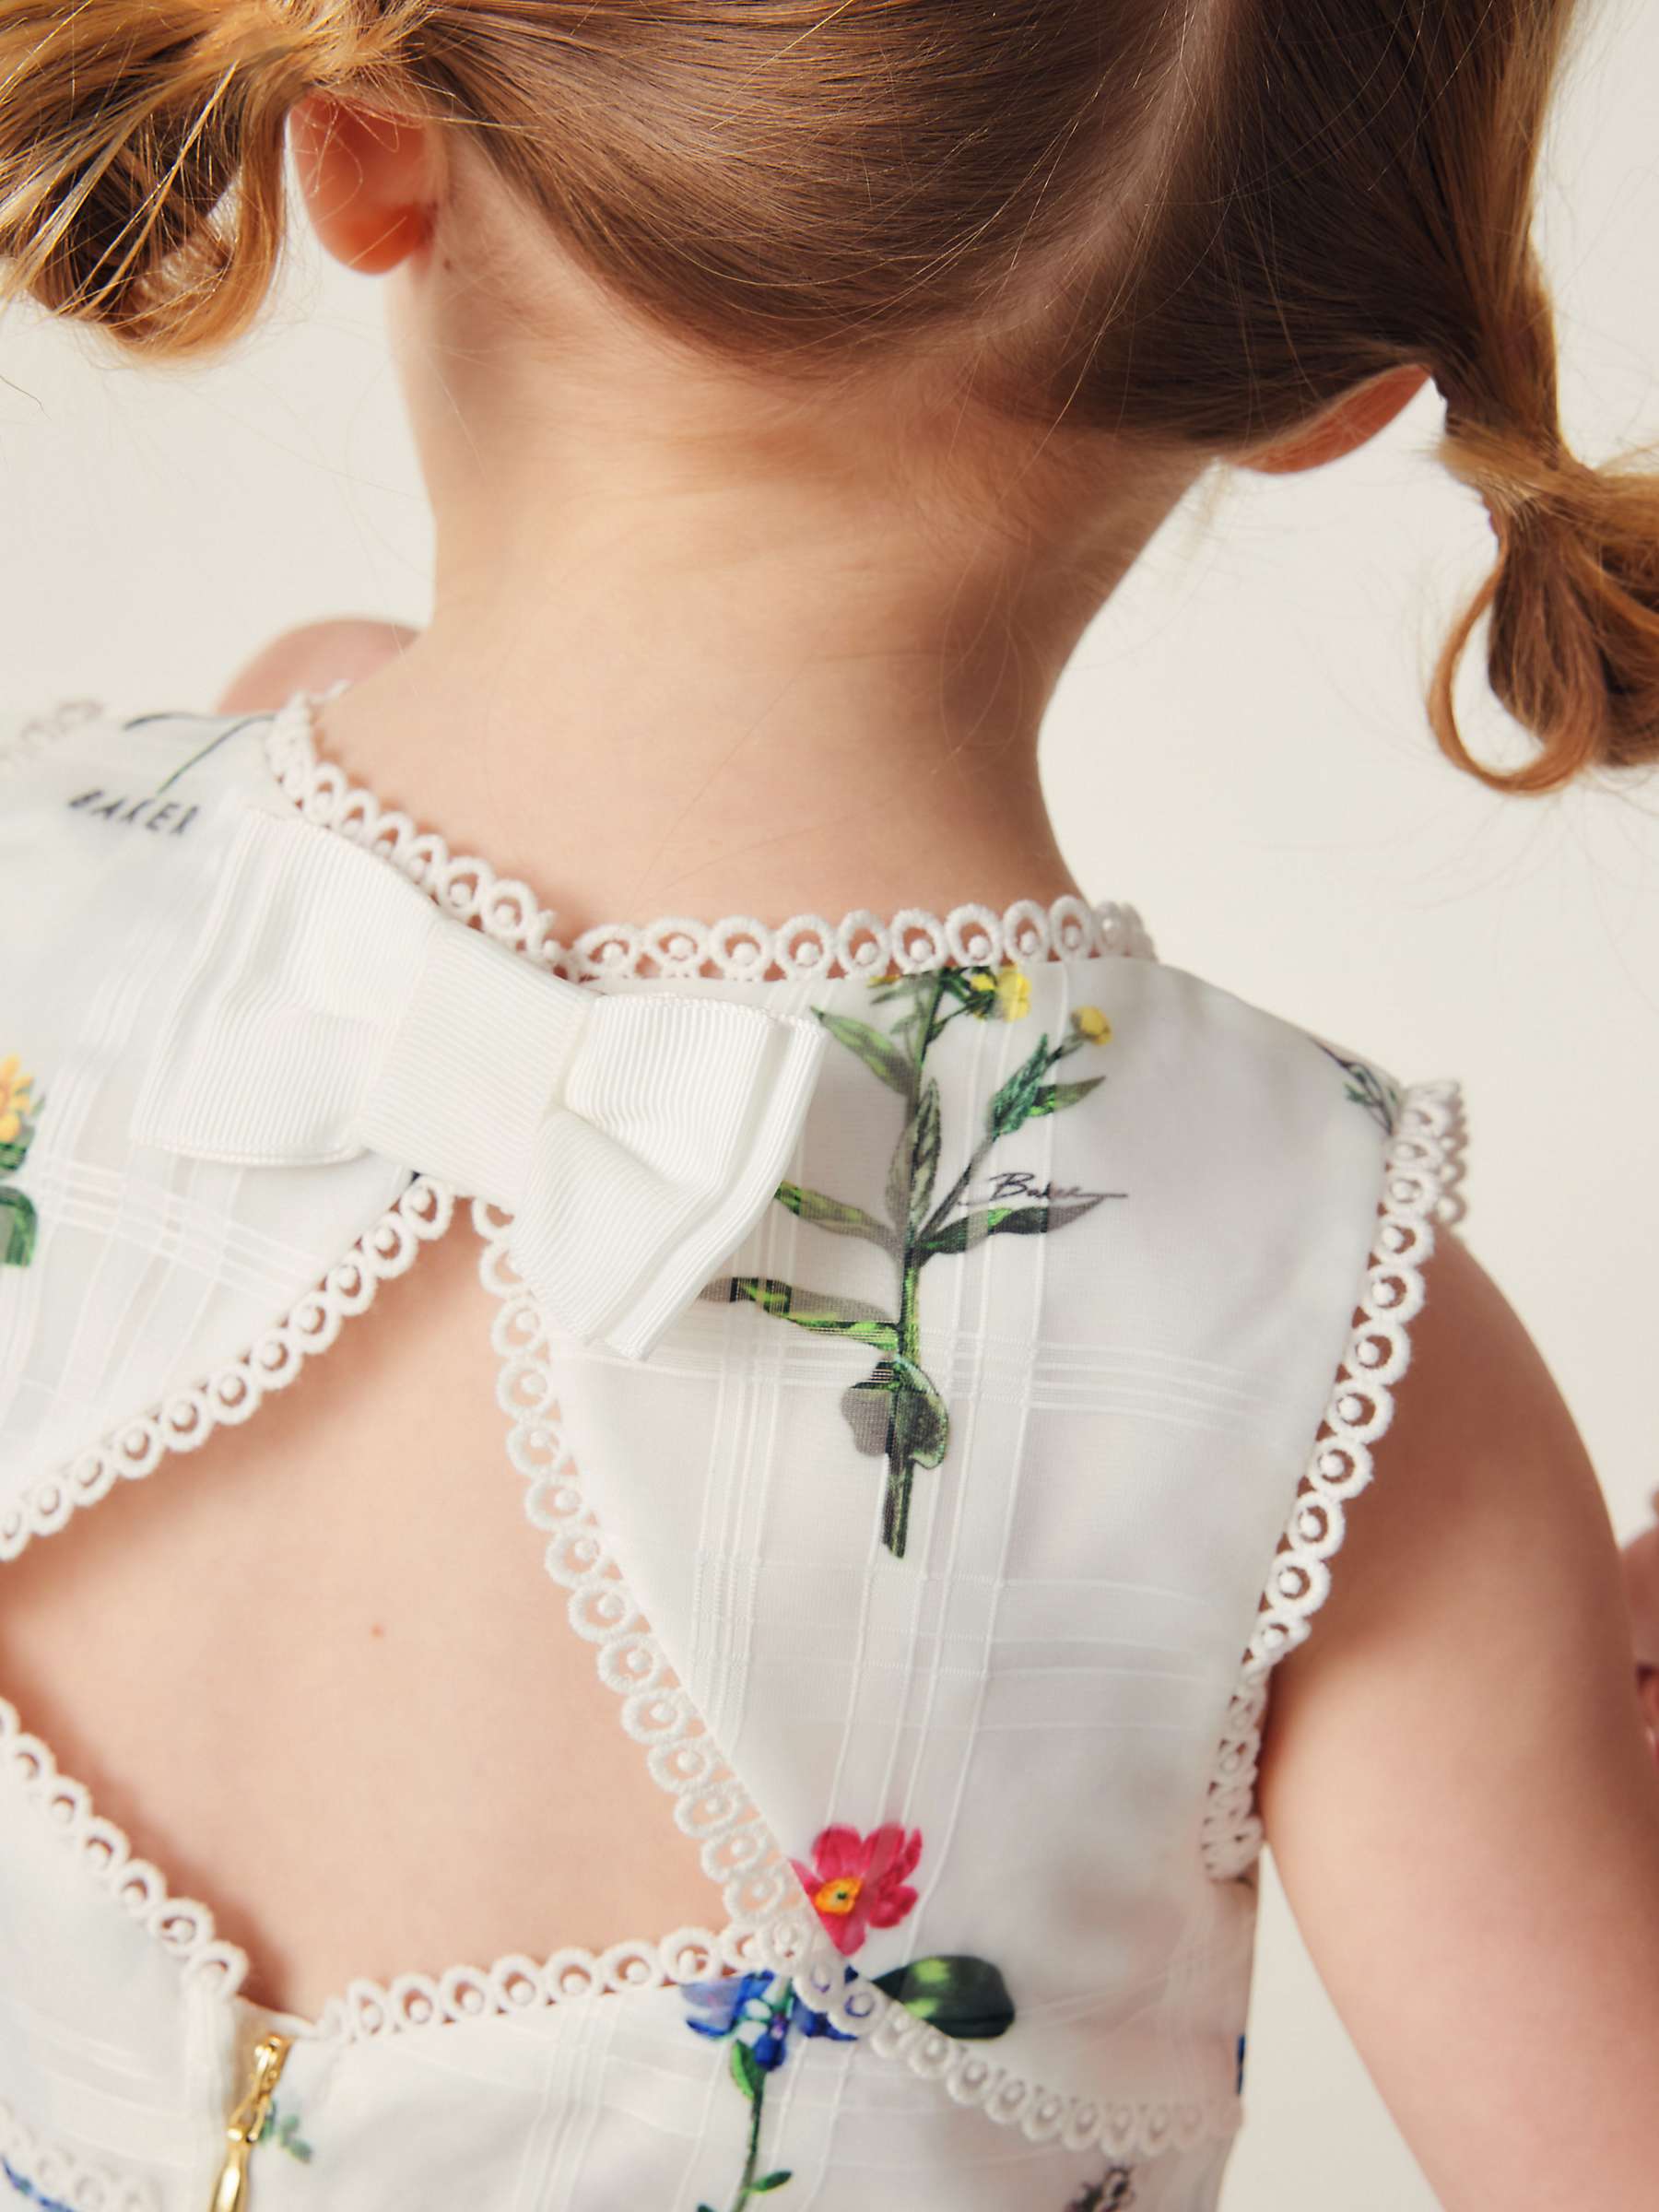 Buy Ted Baker Baby Floral Burnout Frill Dress, White/Multi Online at johnlewis.com